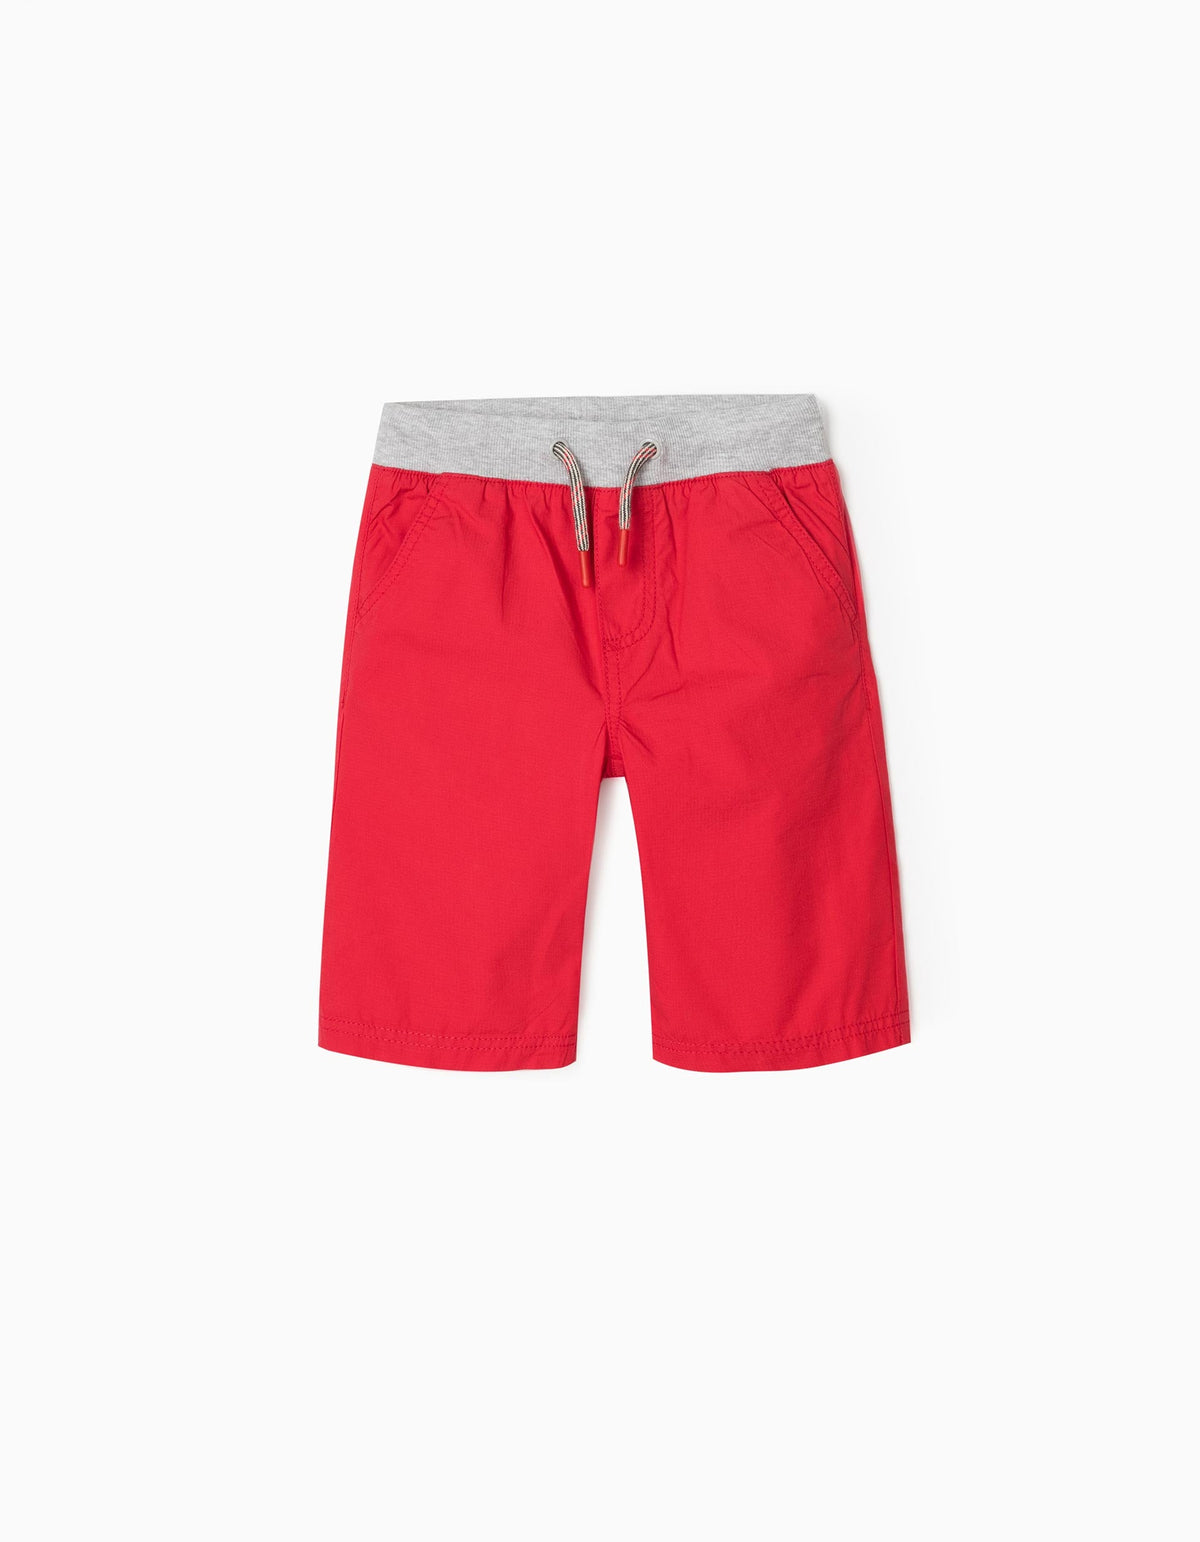 Zippy Boys Red Shorts